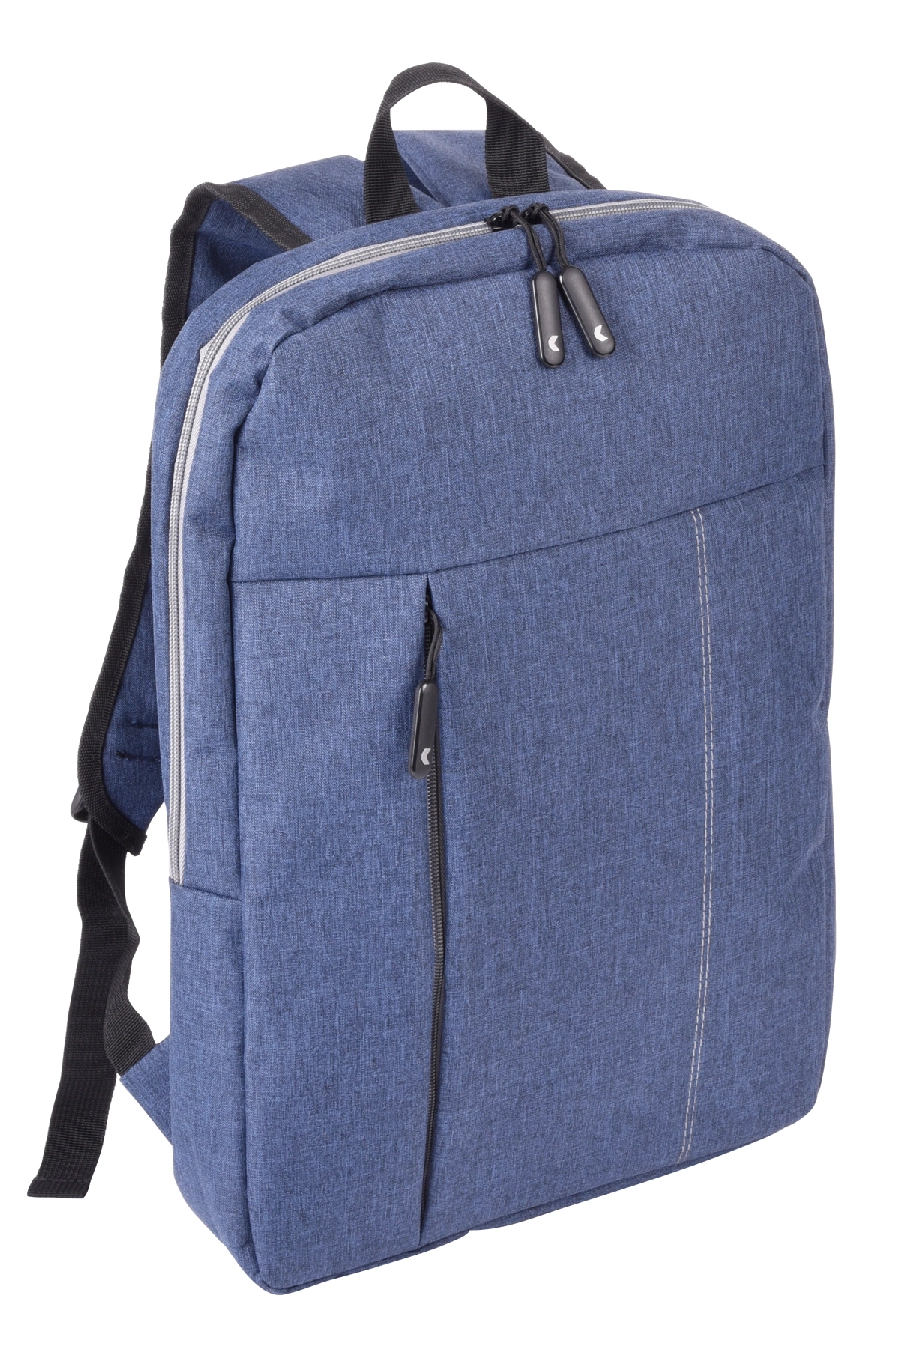 Plecak FLORENCE, niebieski 56-0819672